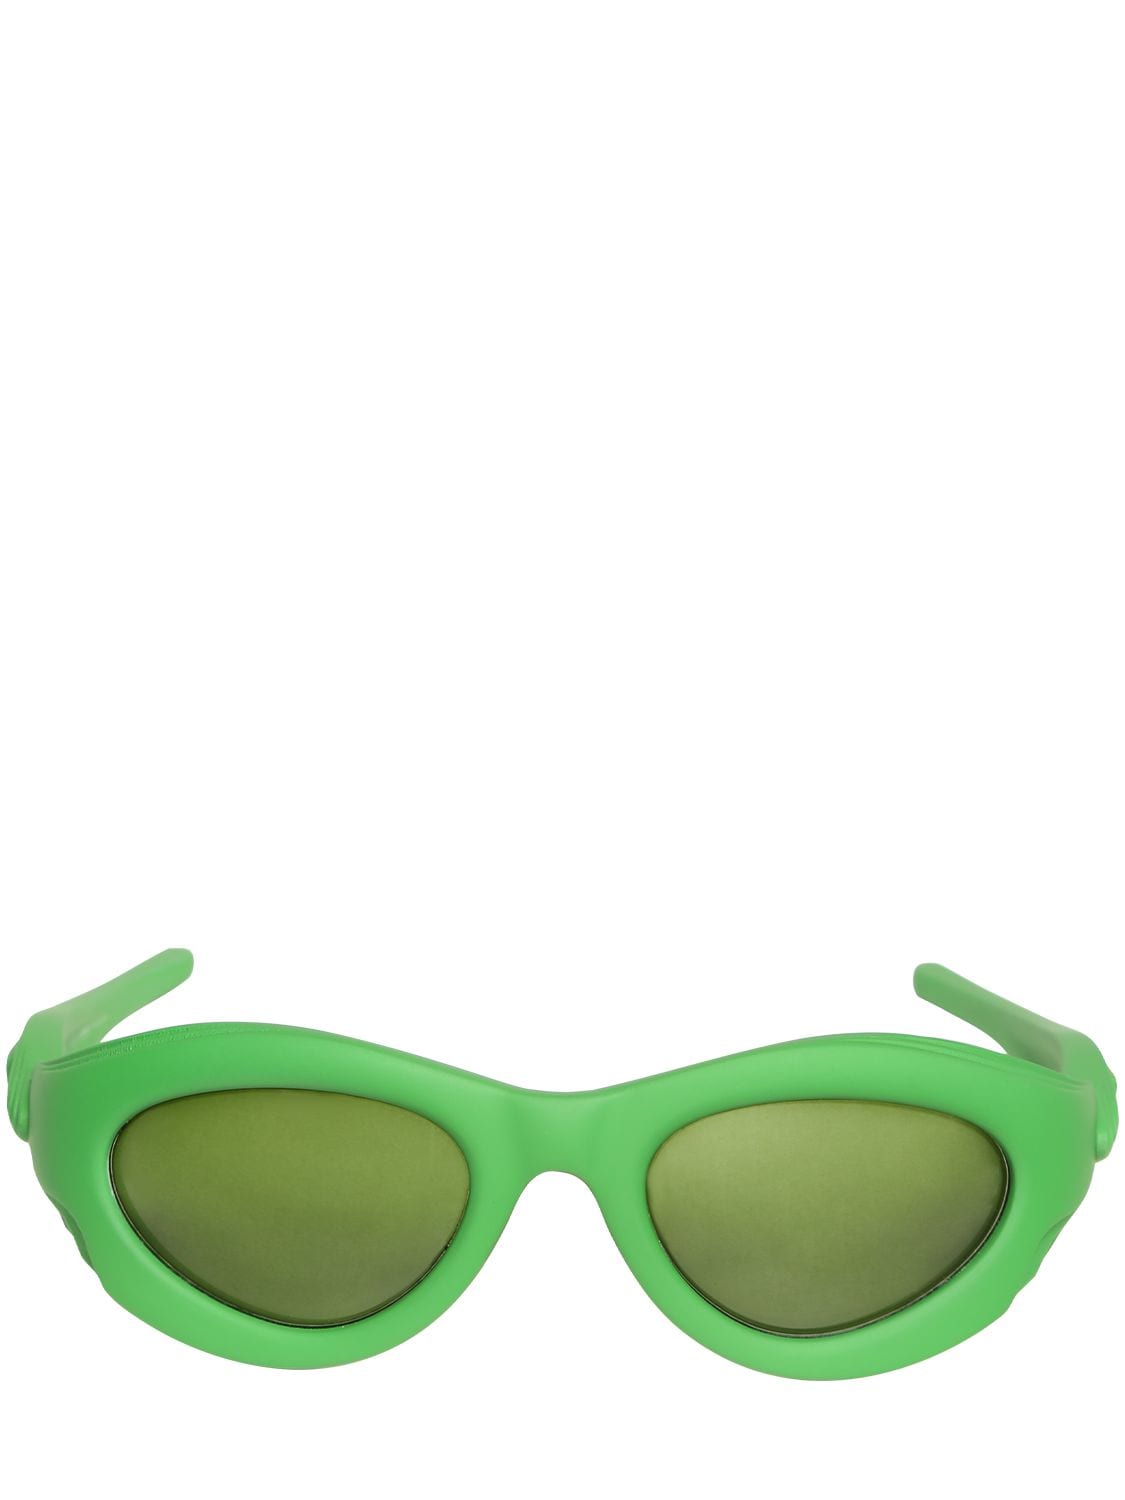 Bv1162s Oval Plastic Sunglasses